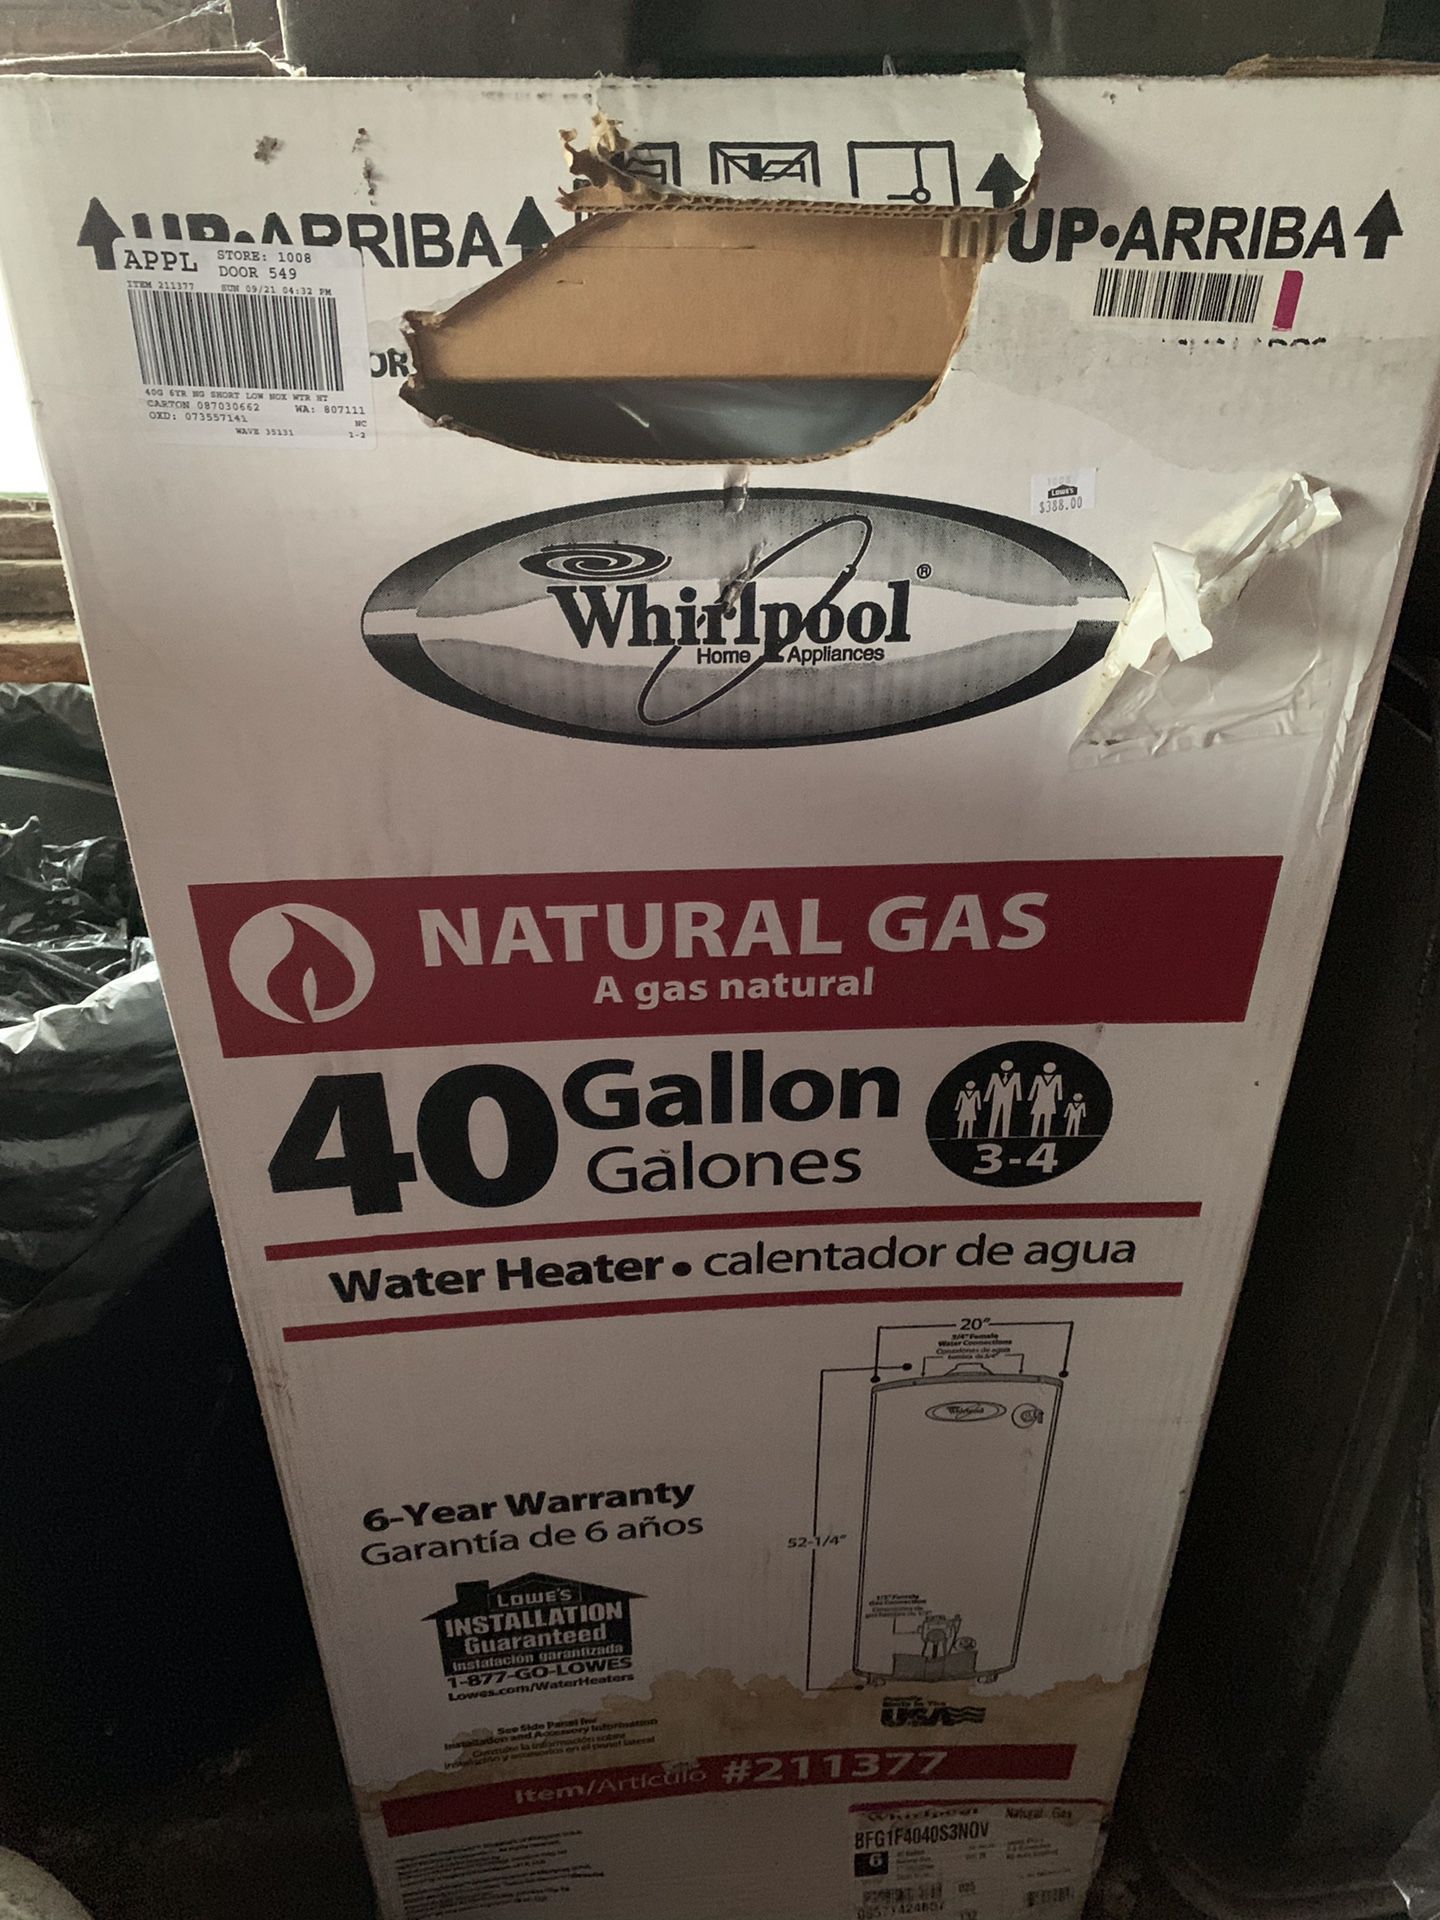 Whirlpool 40 gallon gas water heater